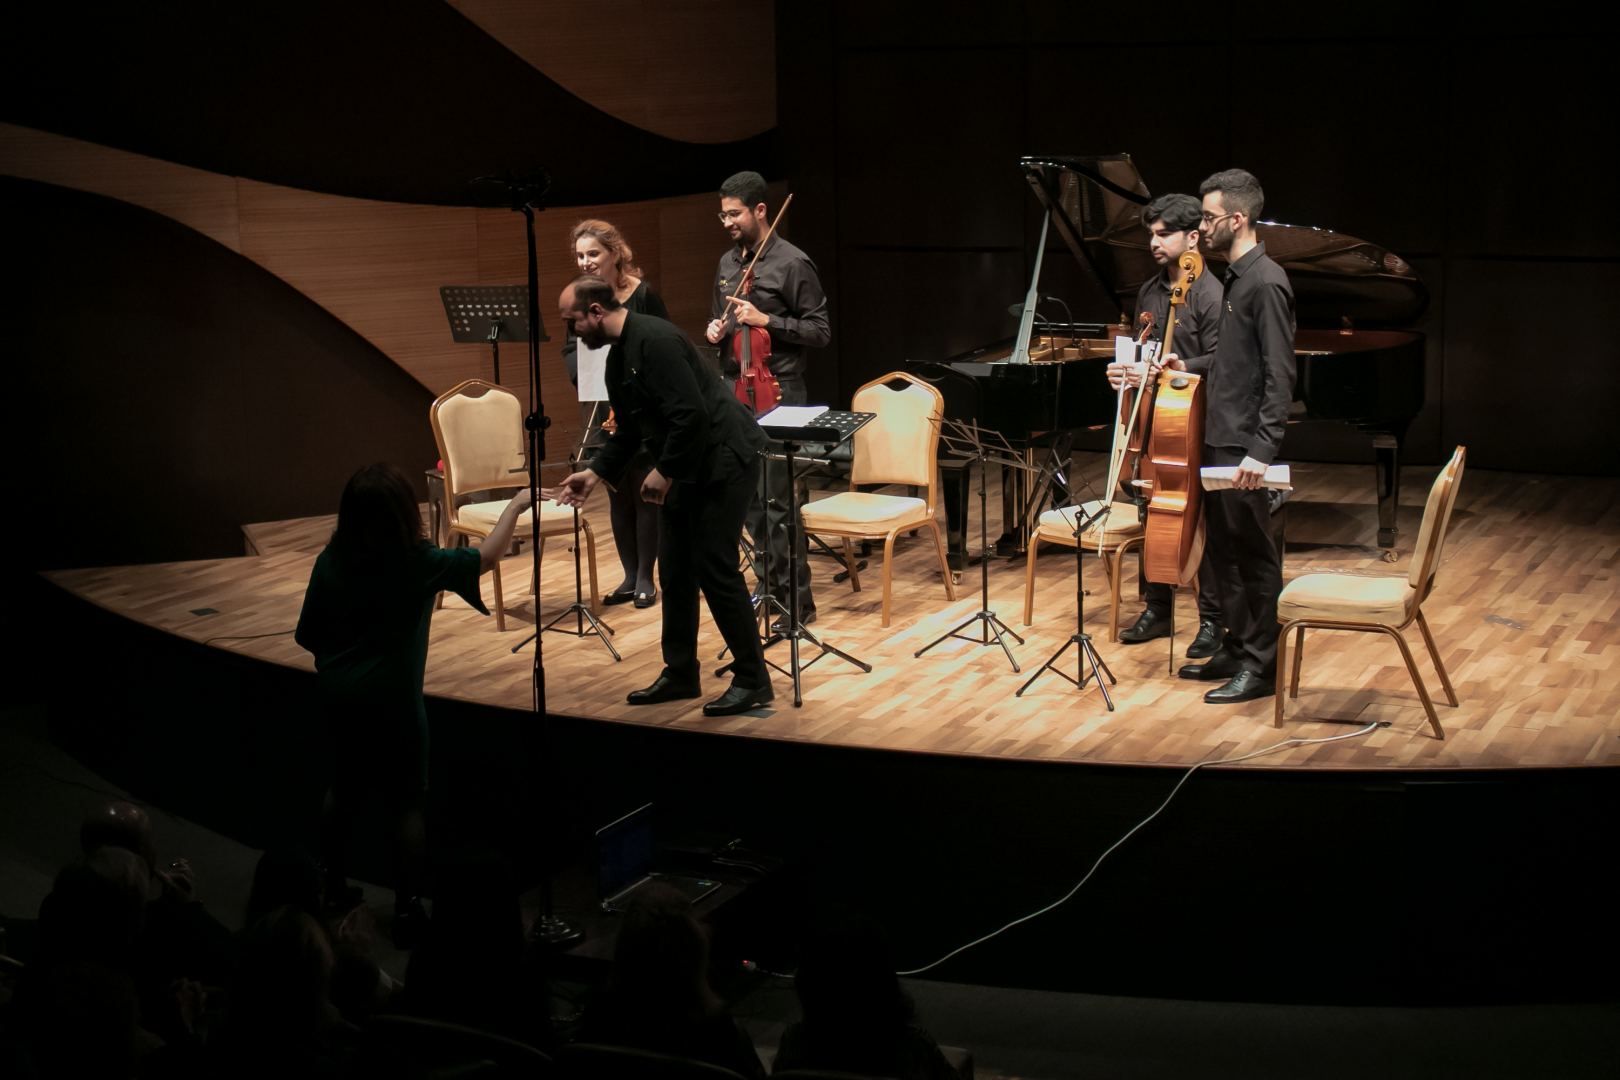 Faraj Garayev's music sounds at Mugham Center [PHOTO/VIDEO]